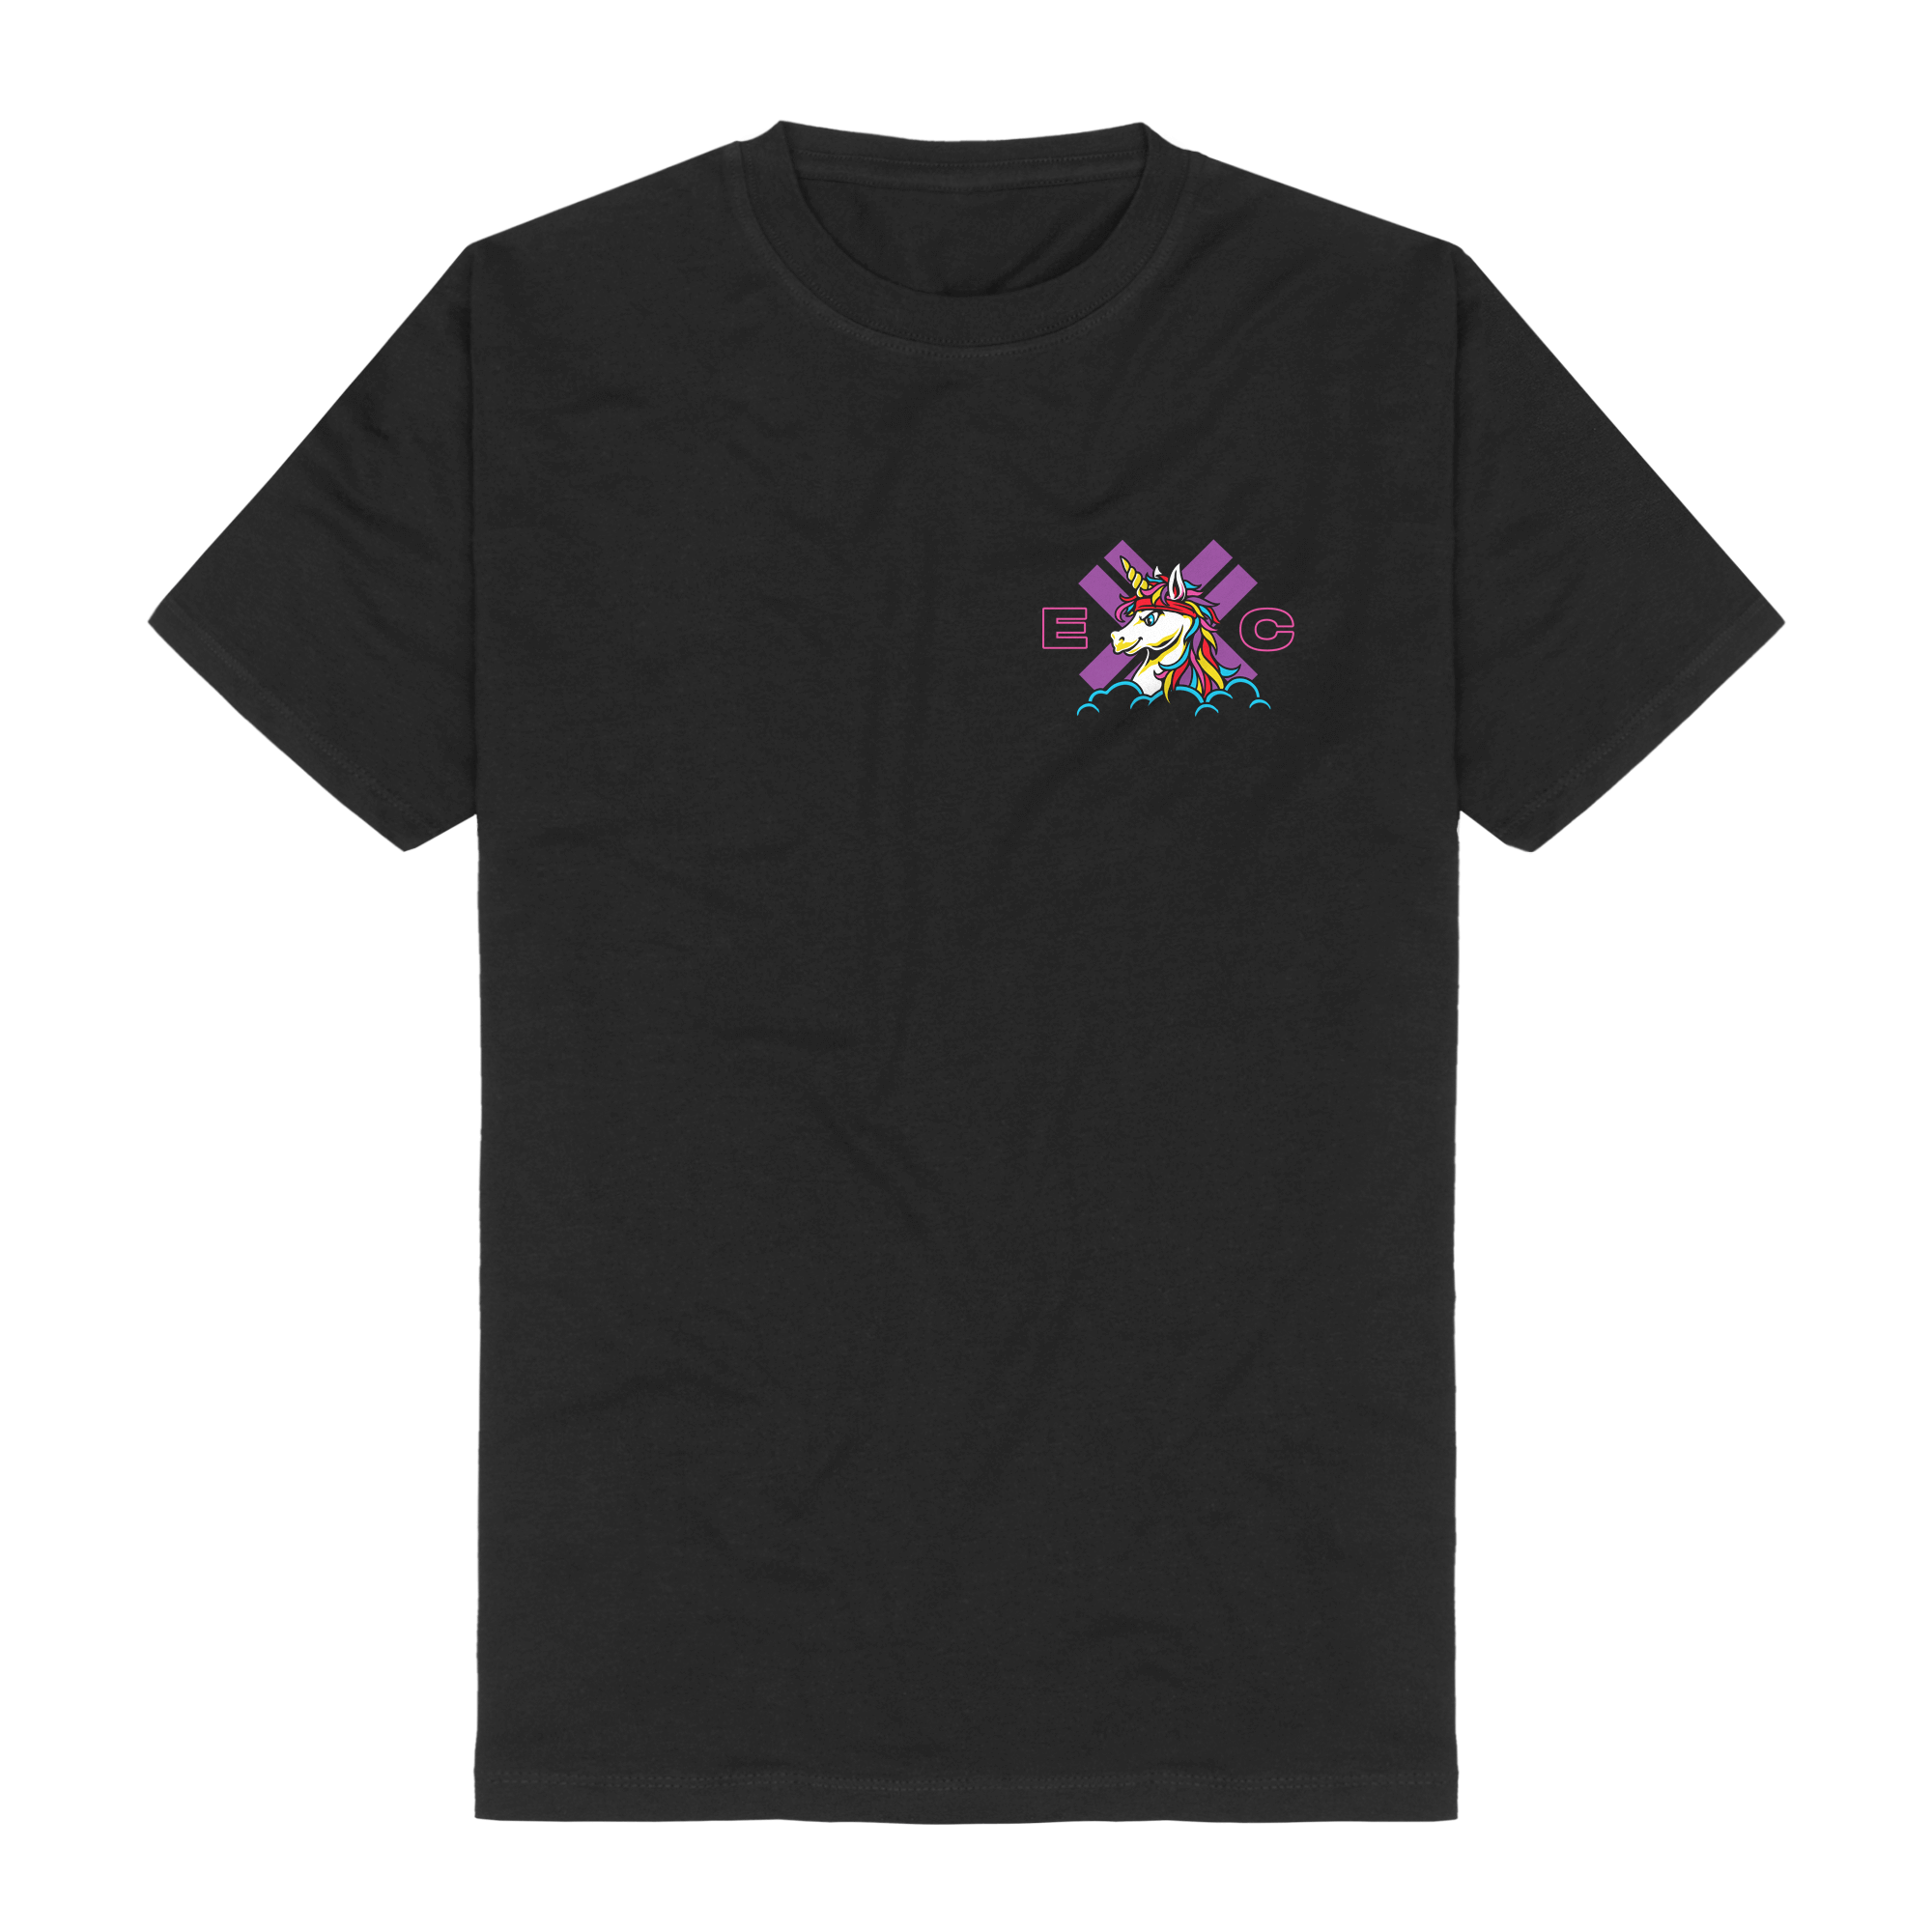 Electric Callboy - Spaceman Unicorn T-Shirt